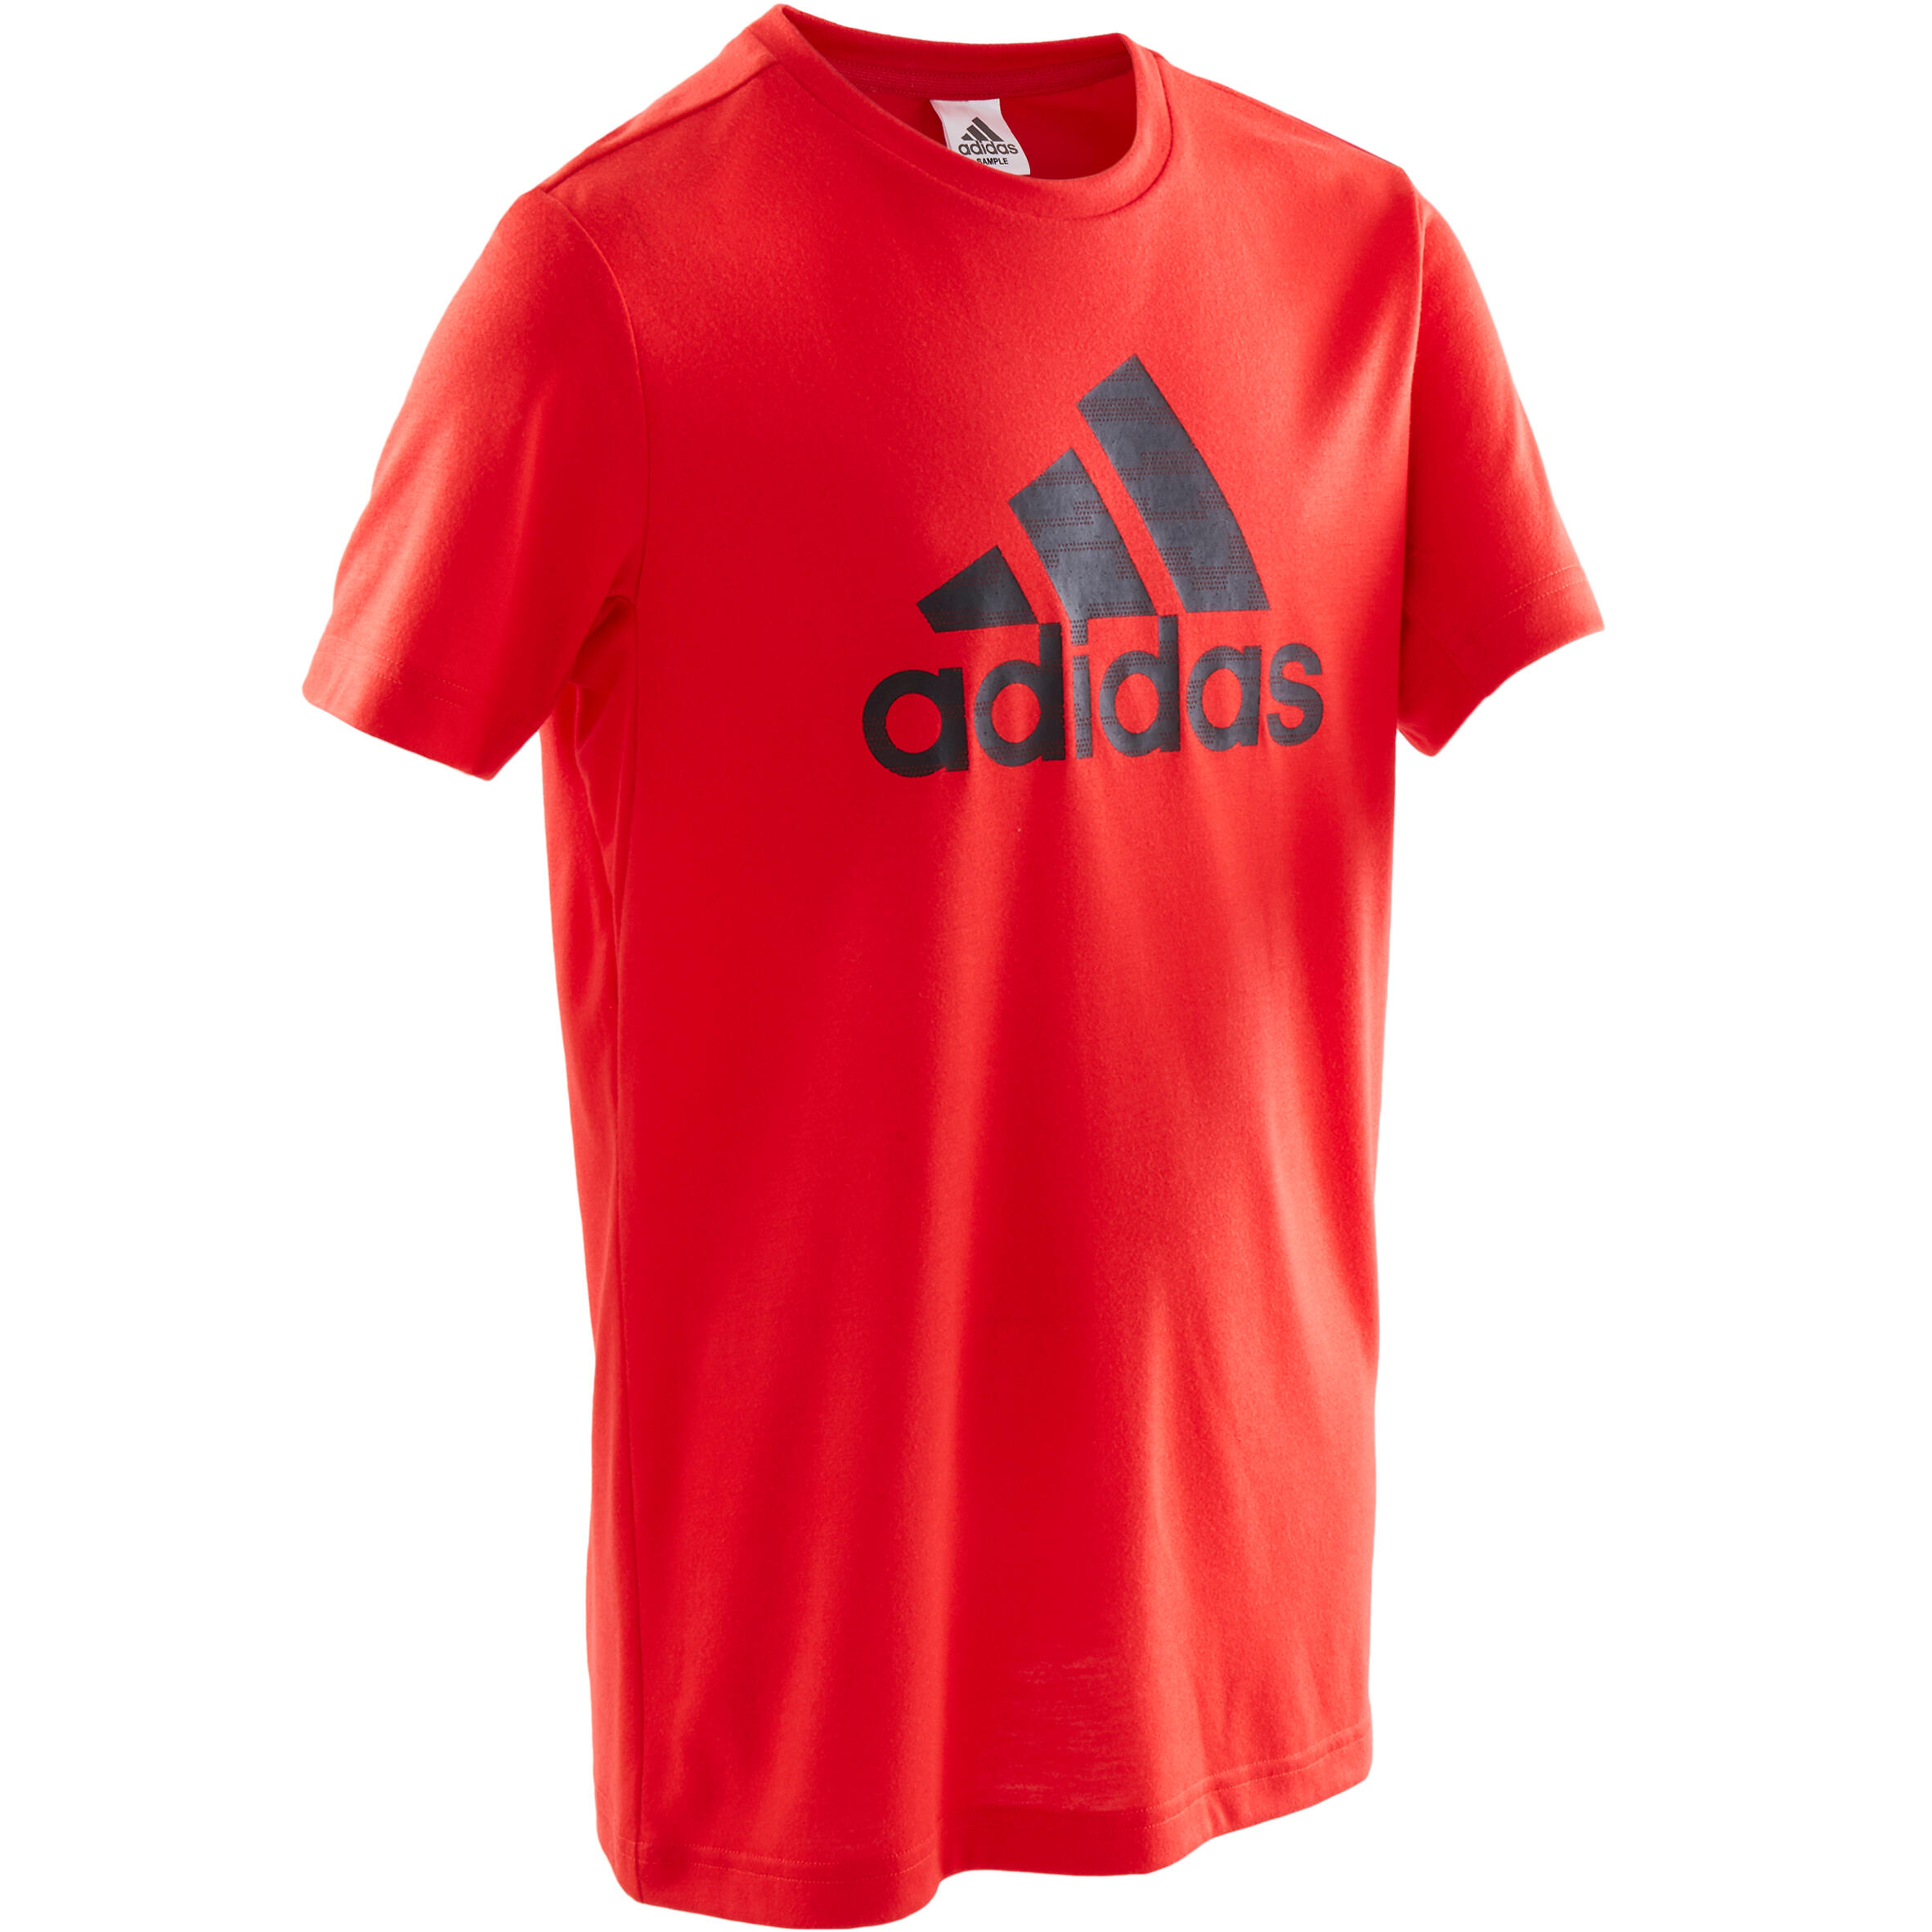 T-shirt Adidas gym bambino rossa ADIDAS | DECATHLON